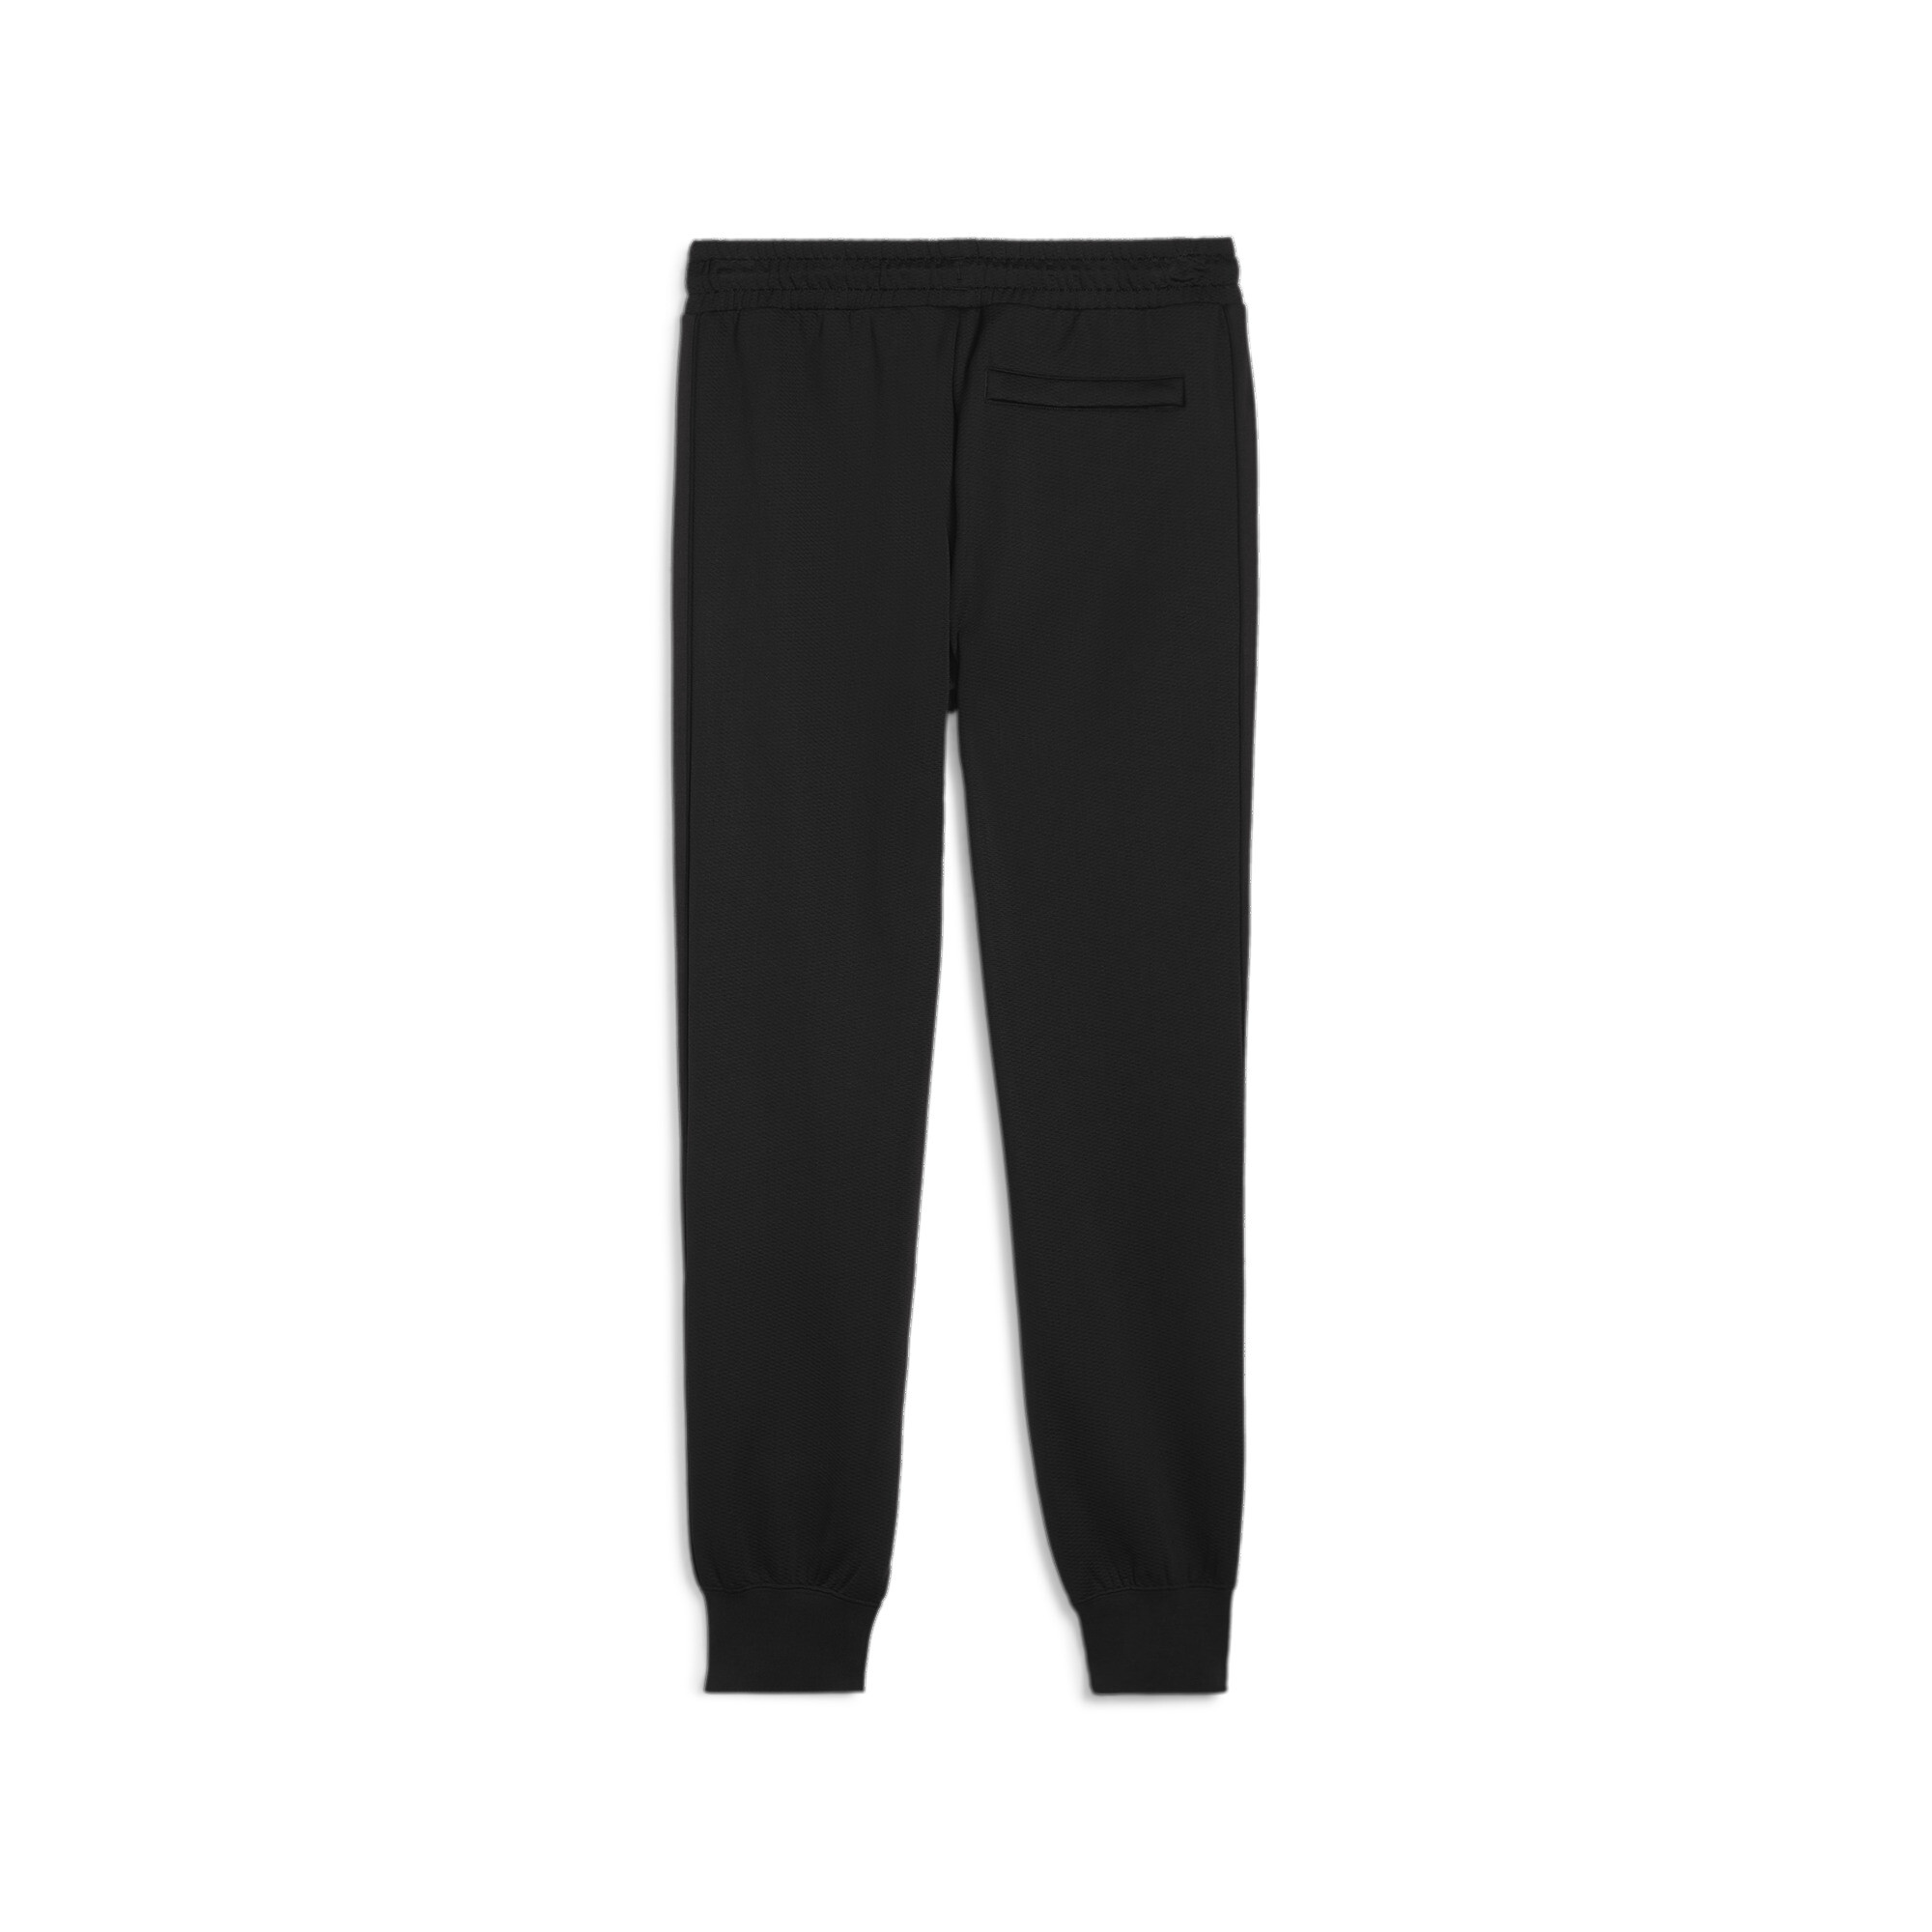 Men's Puma T7's Track Pants, Black, Size XXL, Clothing